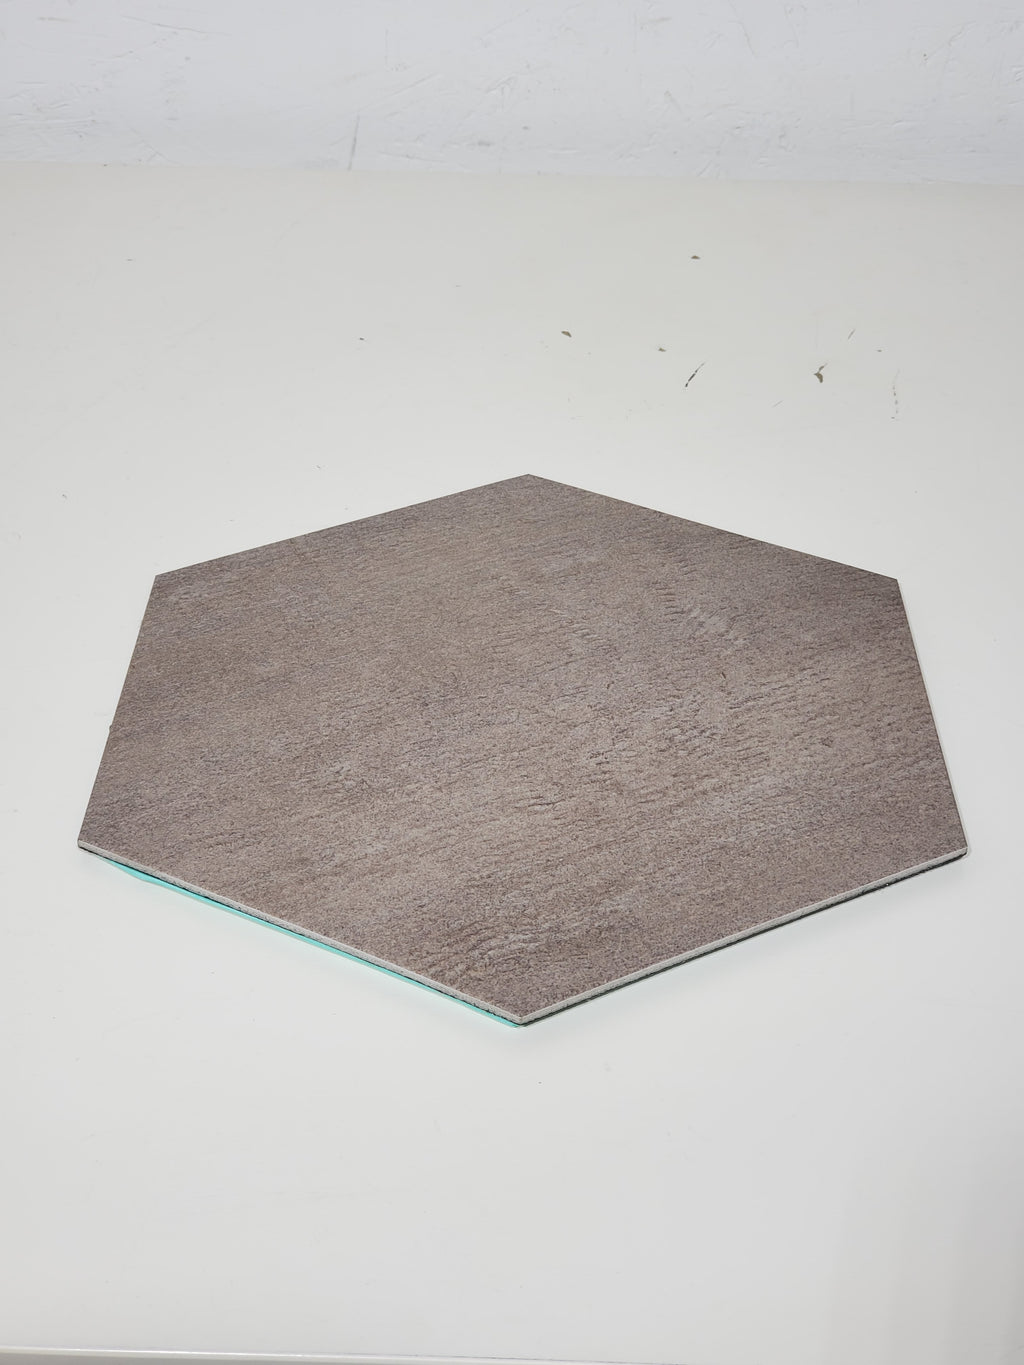 Hexagonal Peel and Stick Vinyl Tile